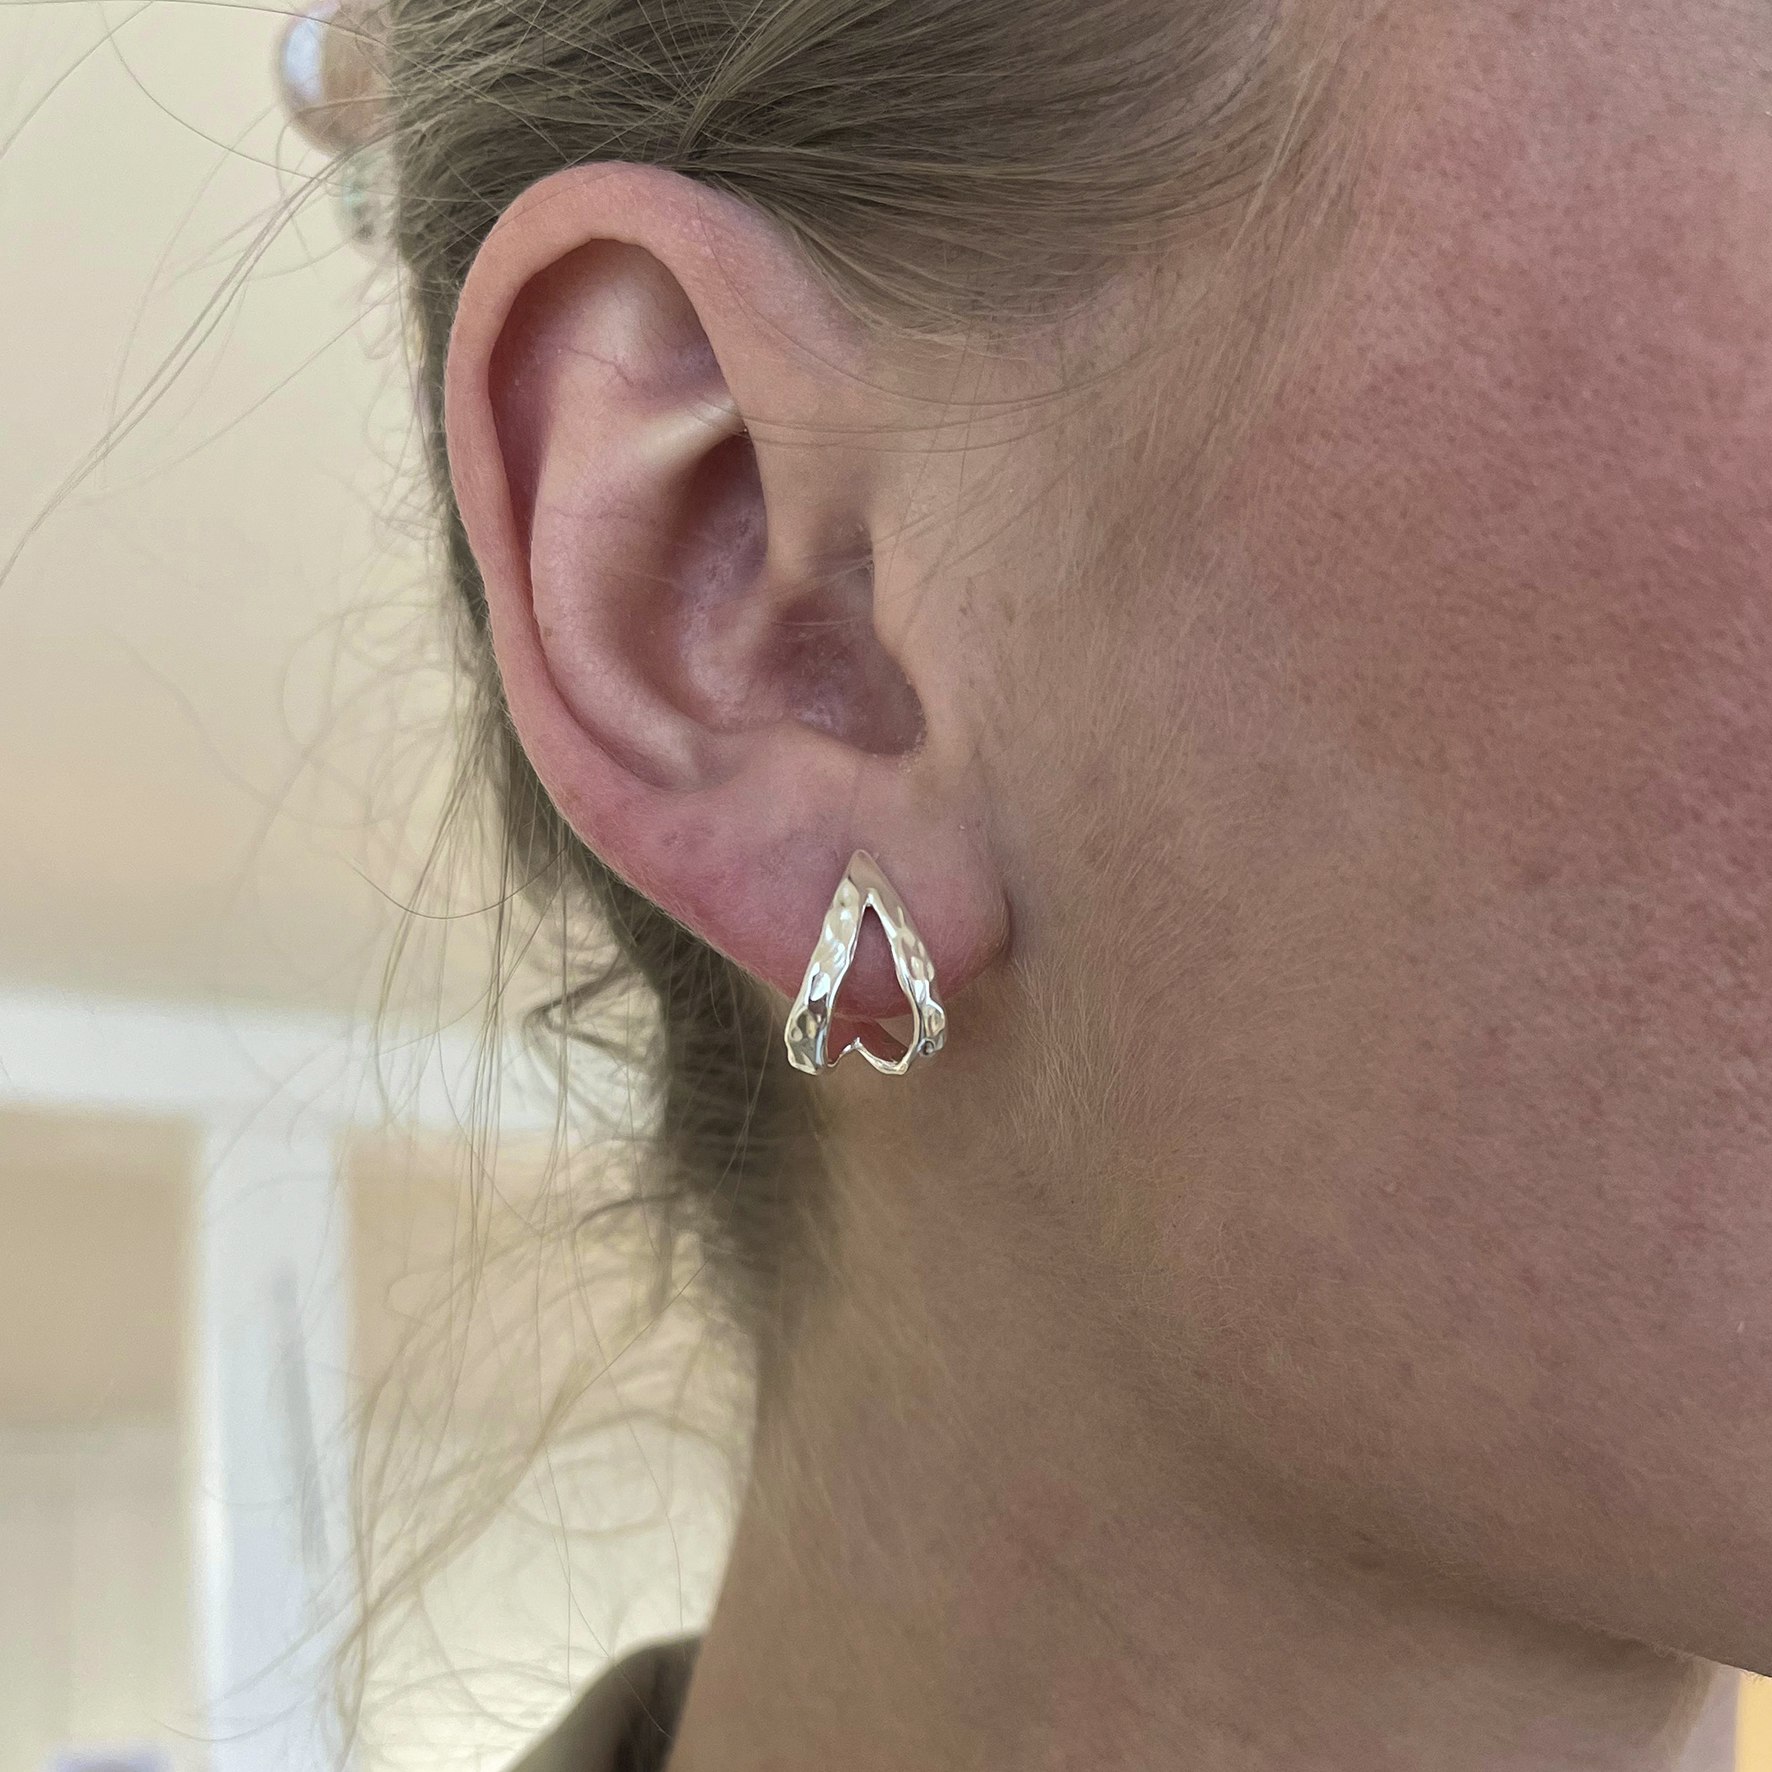 Breakup Earring von Jane Kønig in Vergoldet-Silber Sterling 925